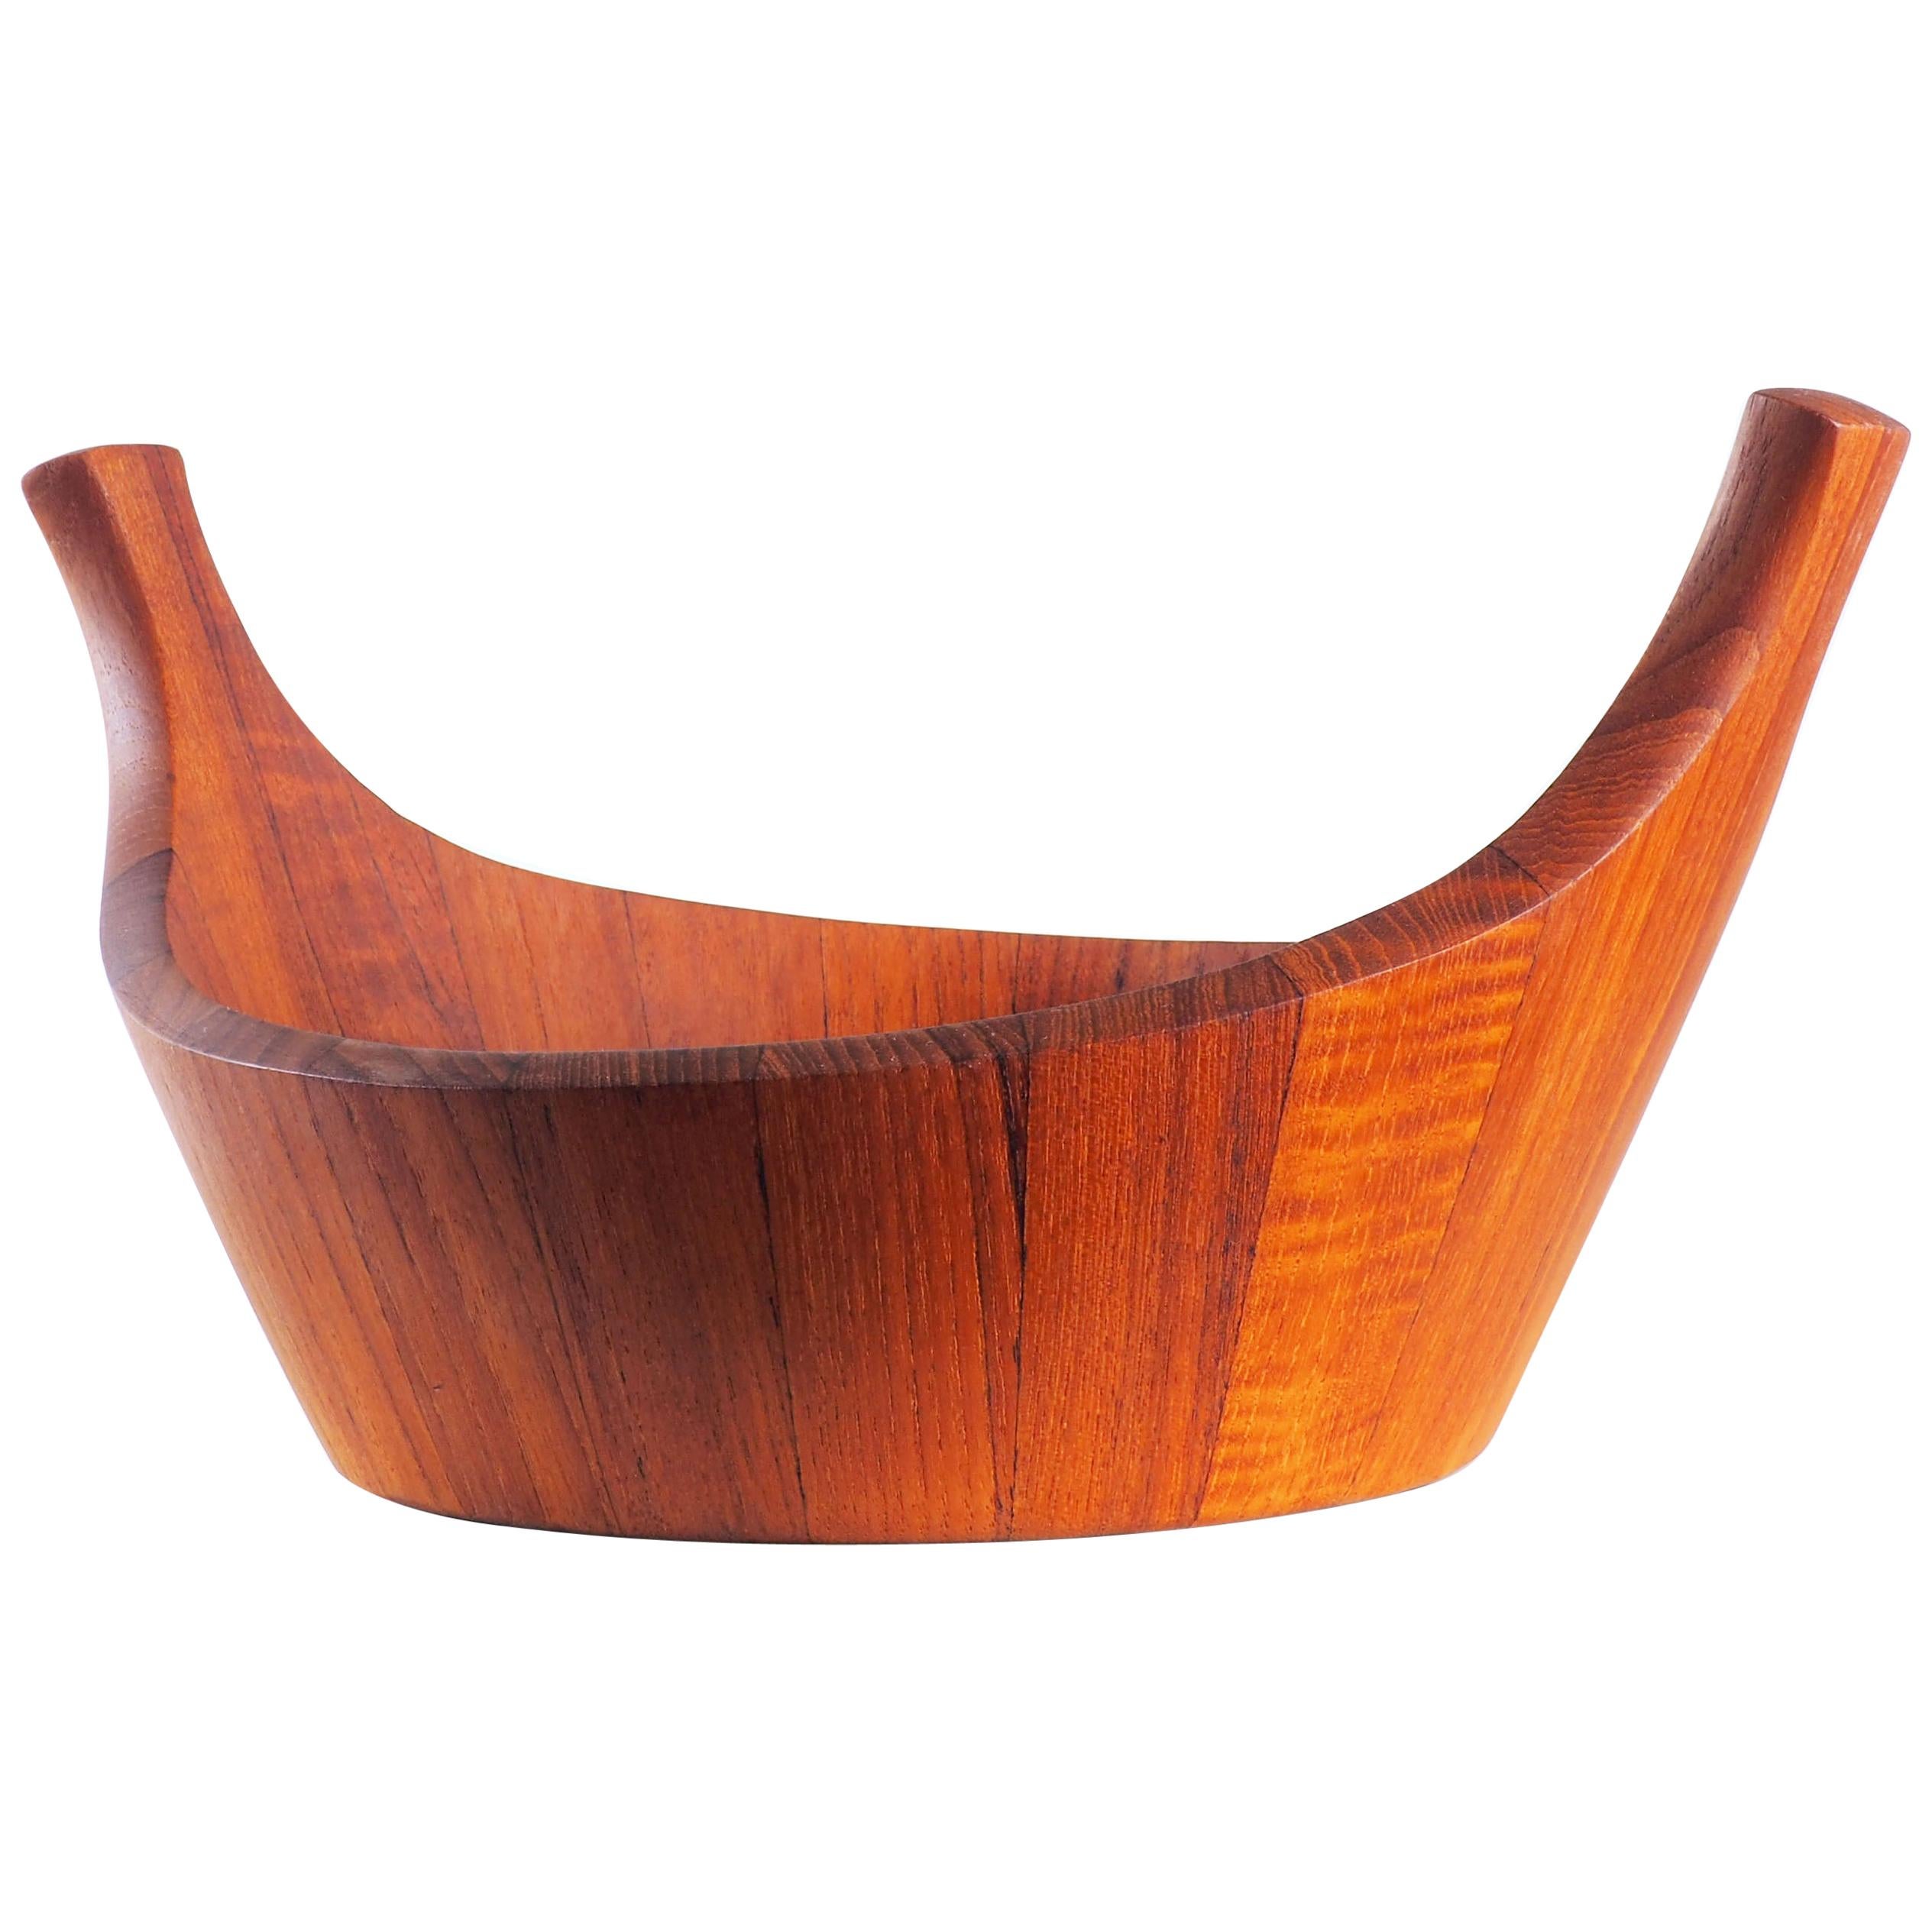 Staved Teak Bowl by the Danish designer Jens Harald Quistgaard